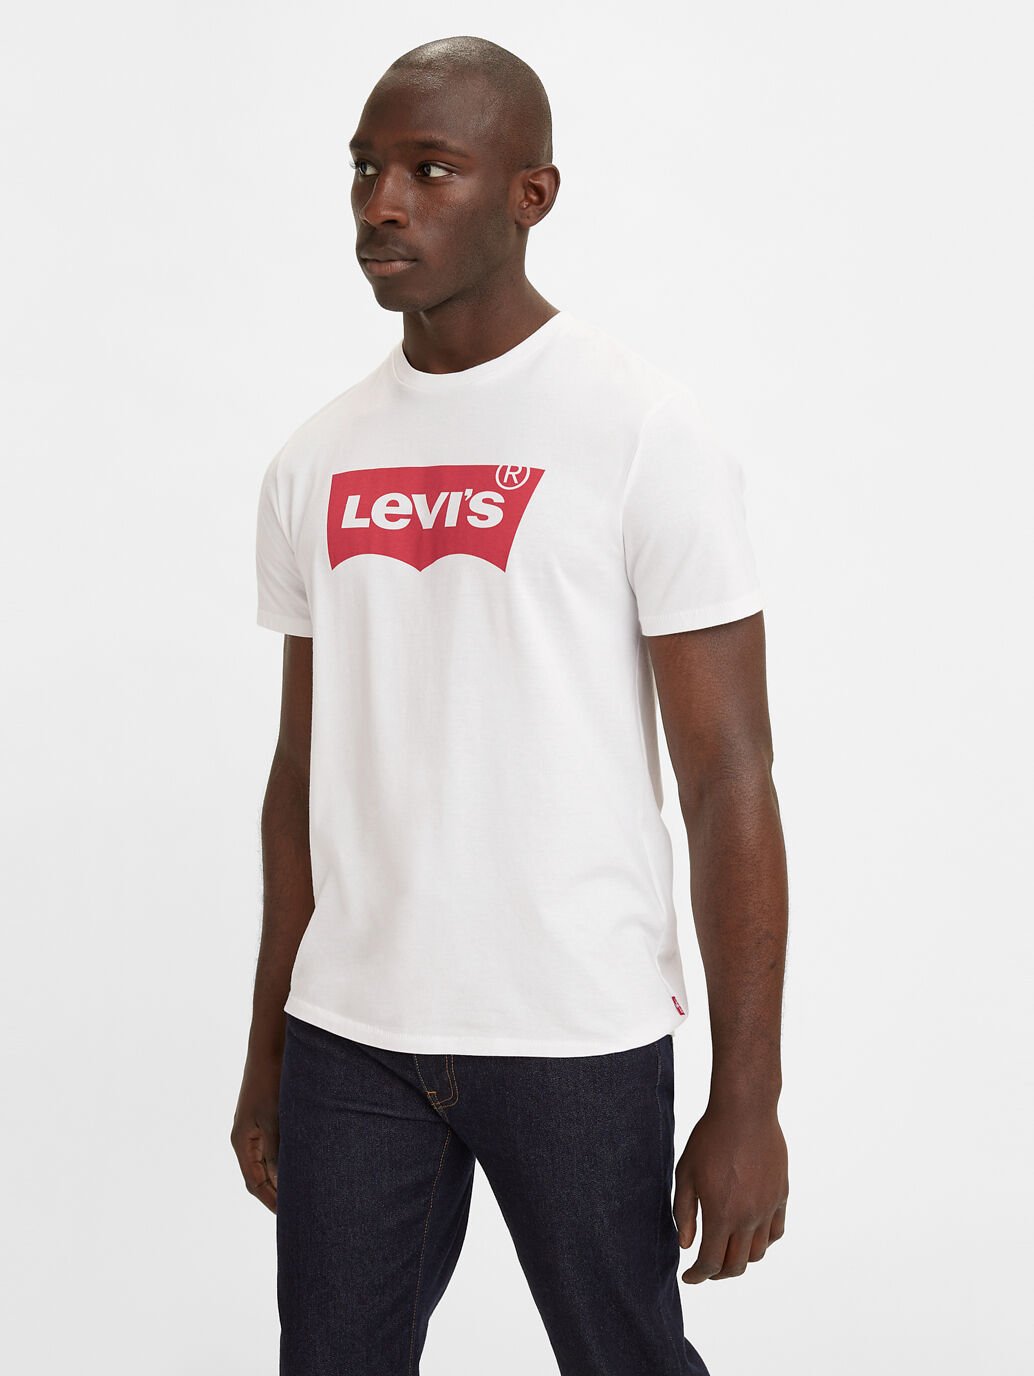 levi white t shirt women's